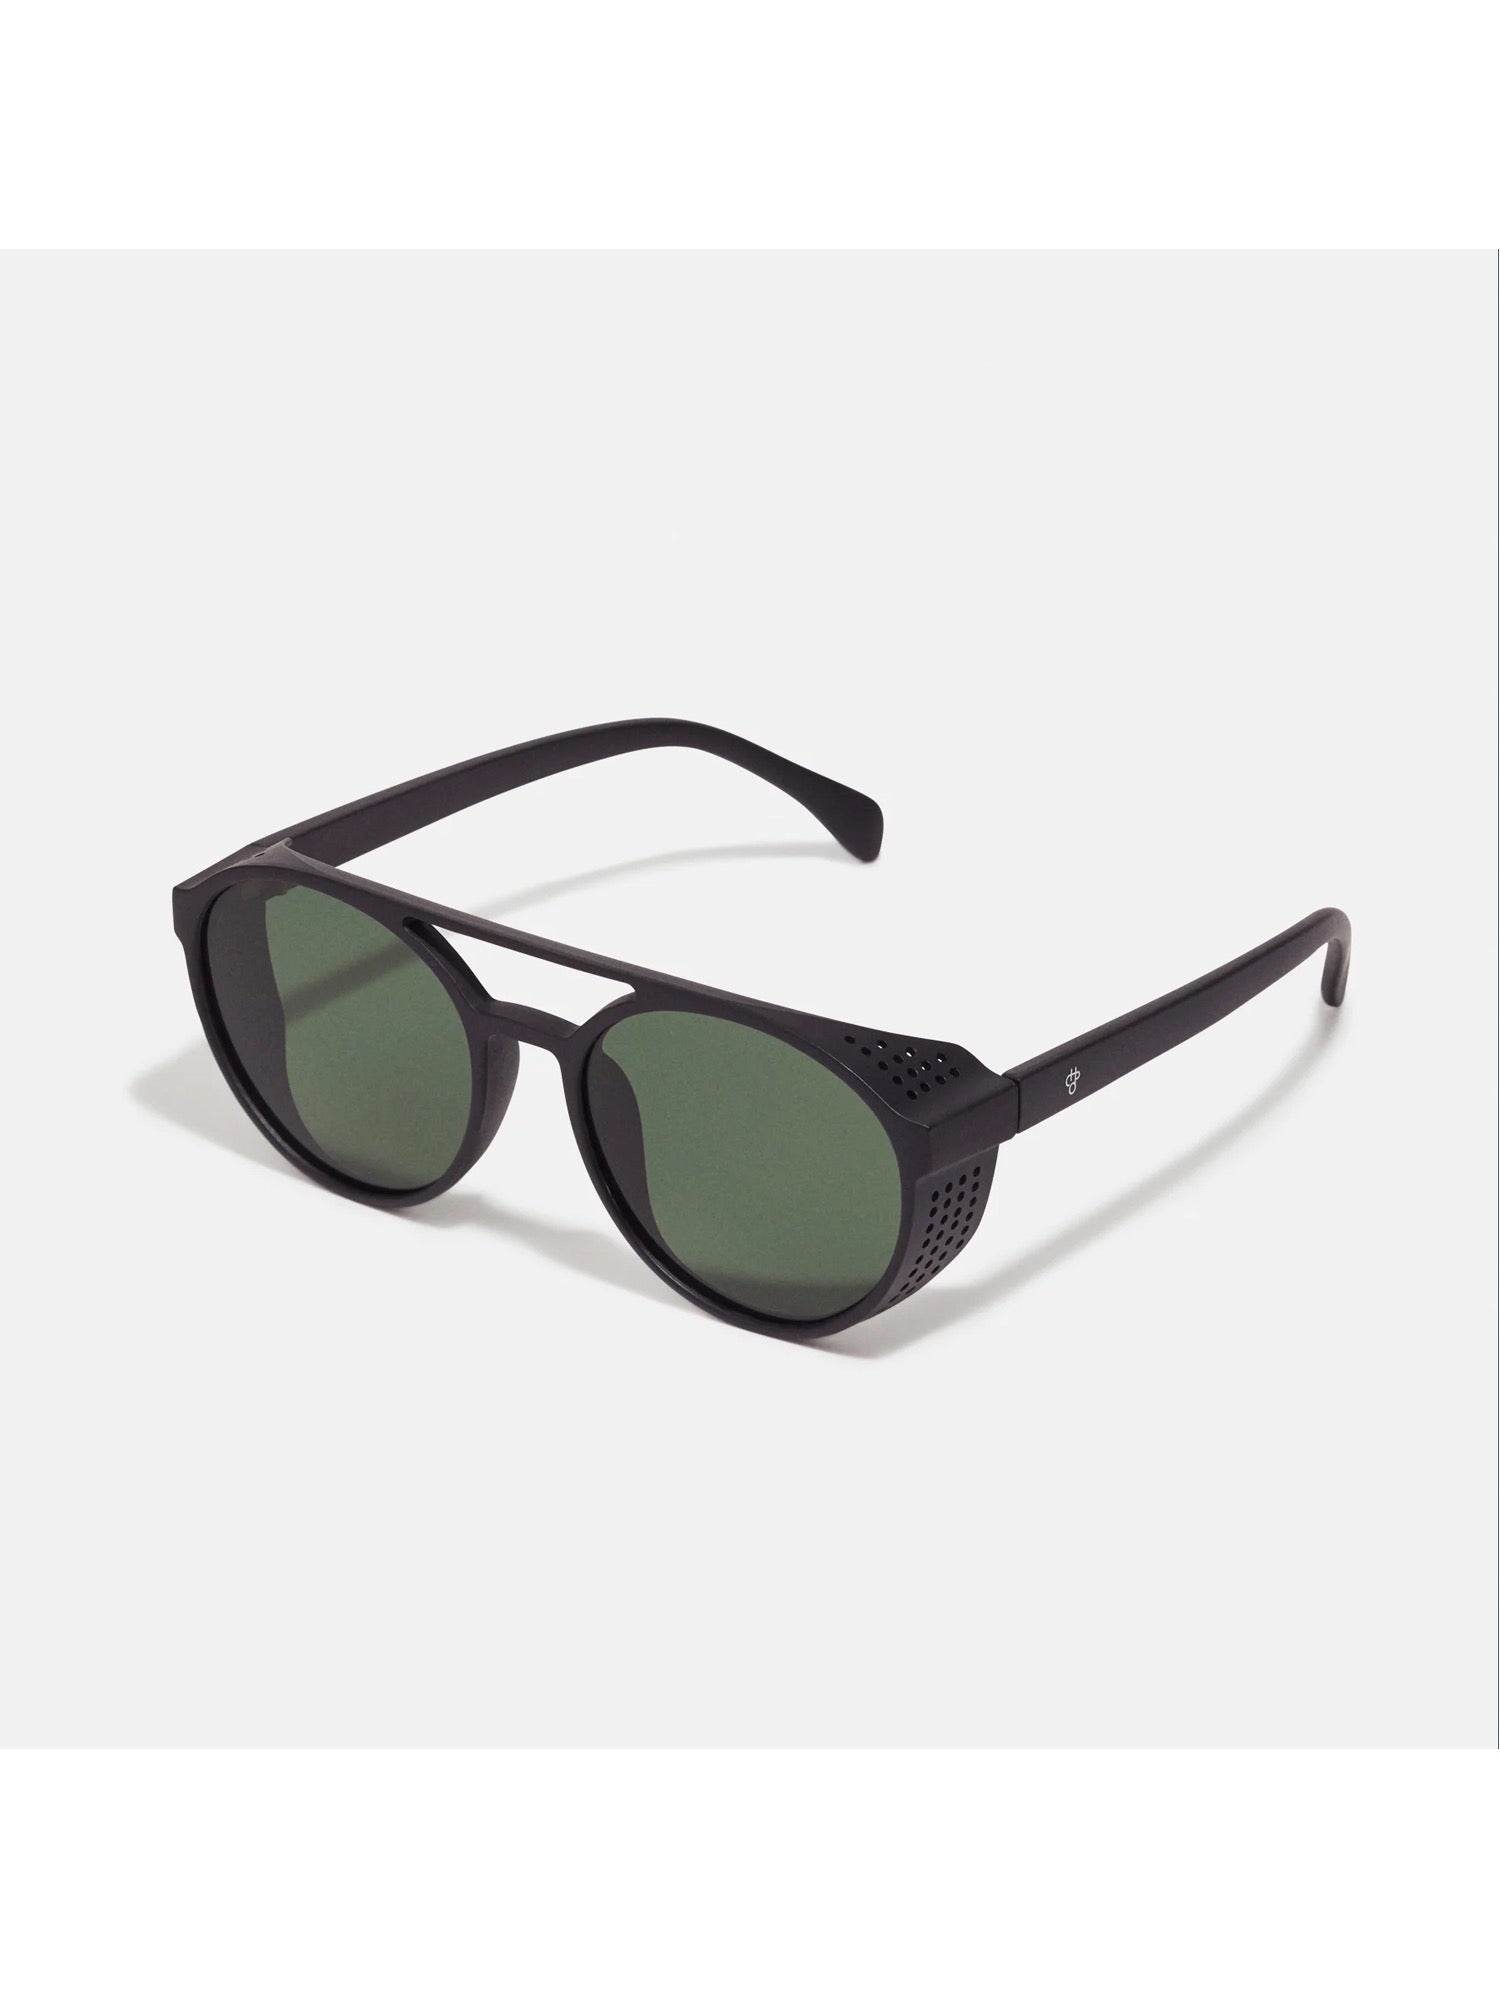 CHPO Rickard Sunglasses - Recycled Plastic Black Sunglasses